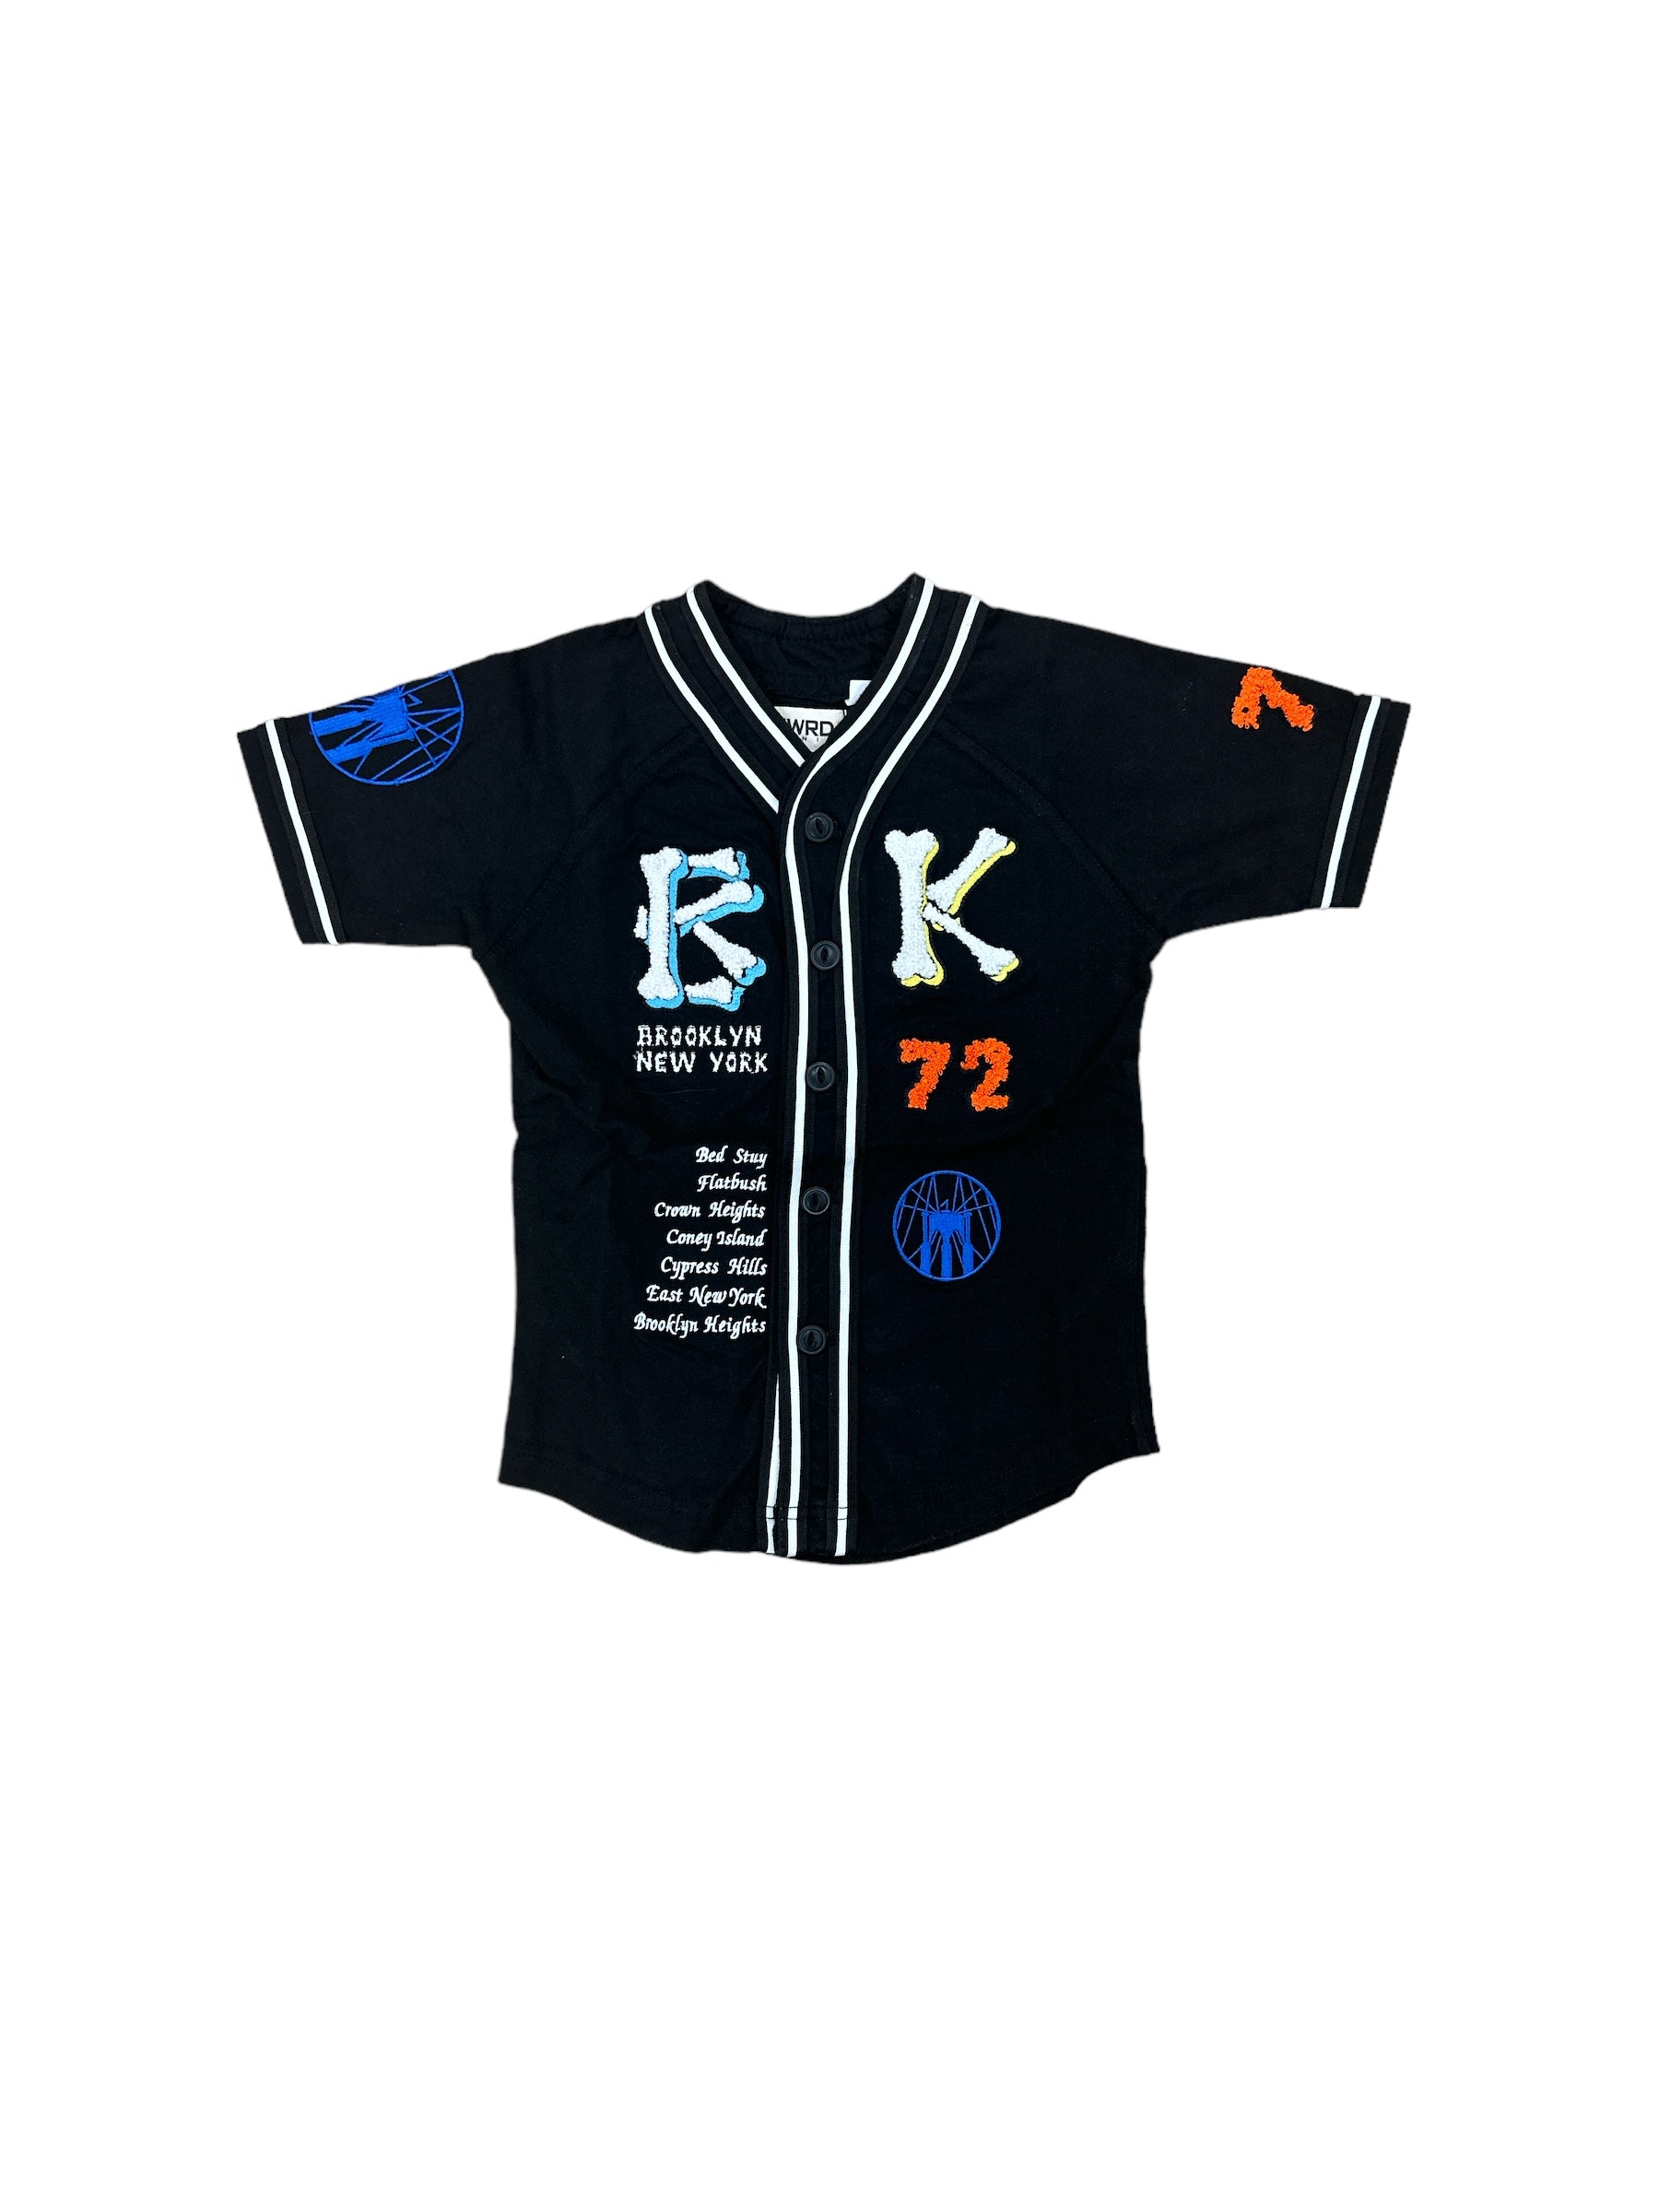 FWRD Kids 'Brooklyn Baseball ' Jersey (Black) FW-180387K/LK